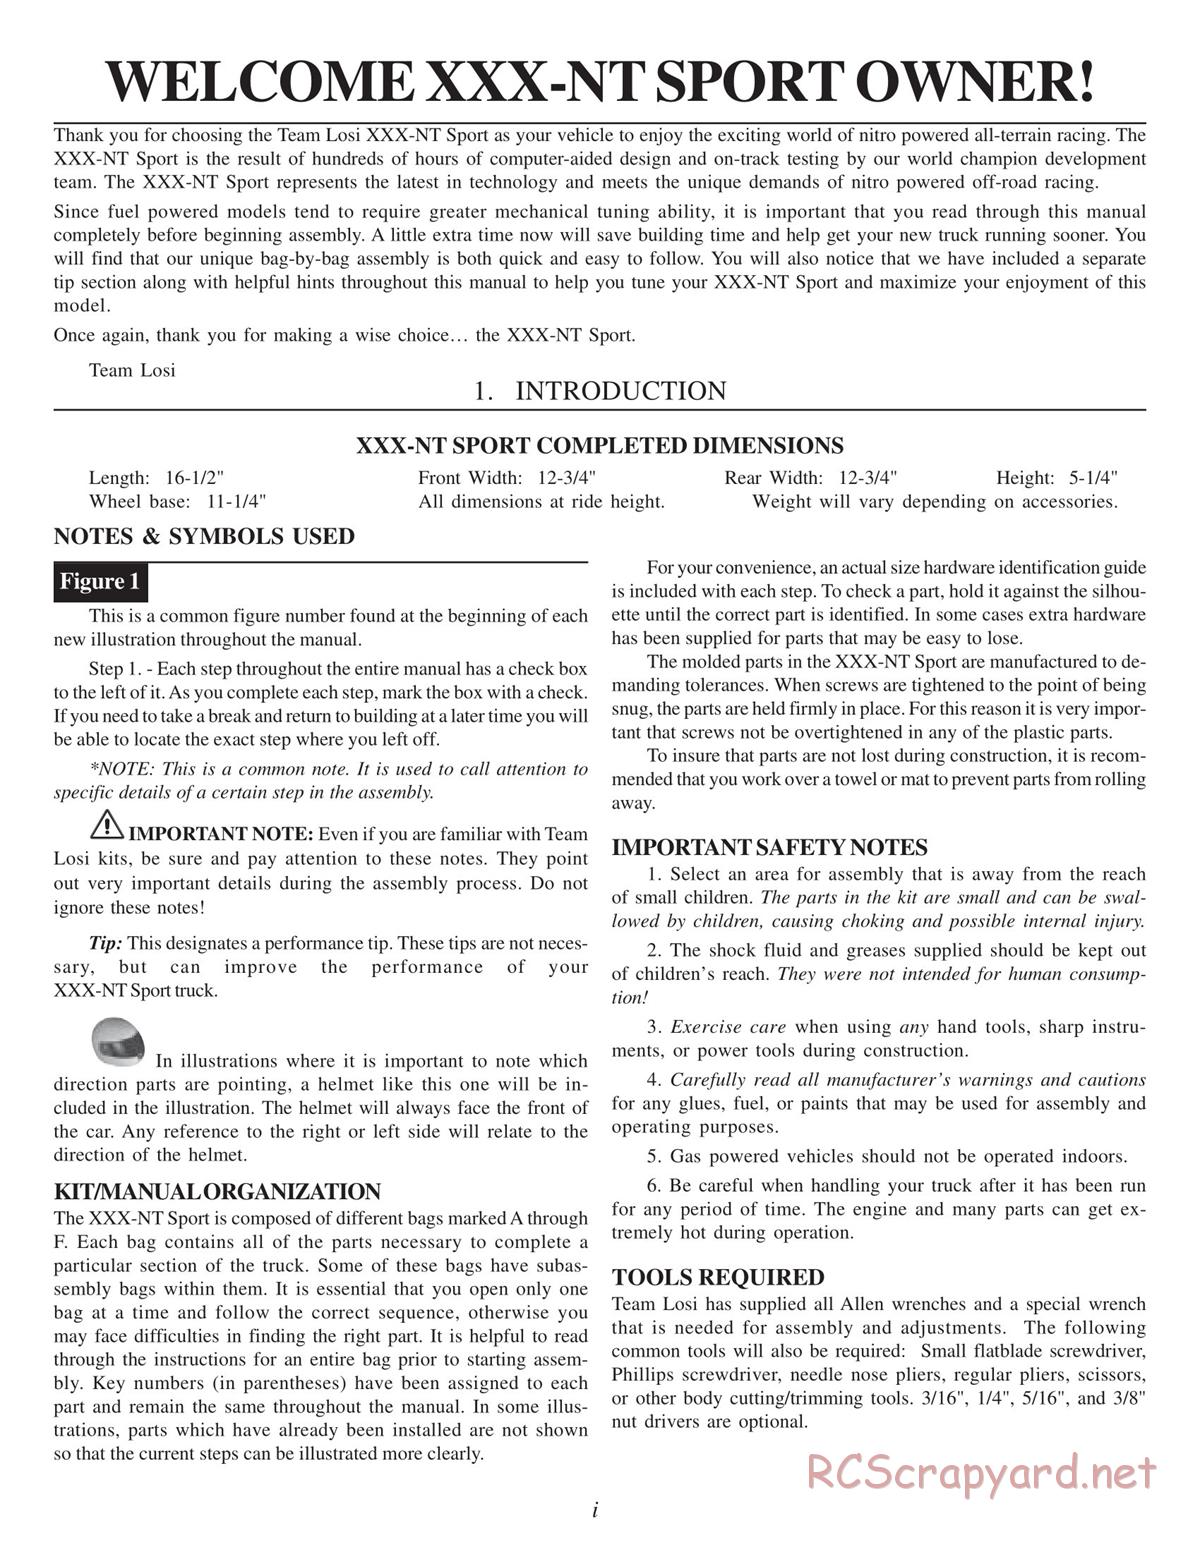 Team Losi - XXX-NT Sport RTR II - Manual - Page 2